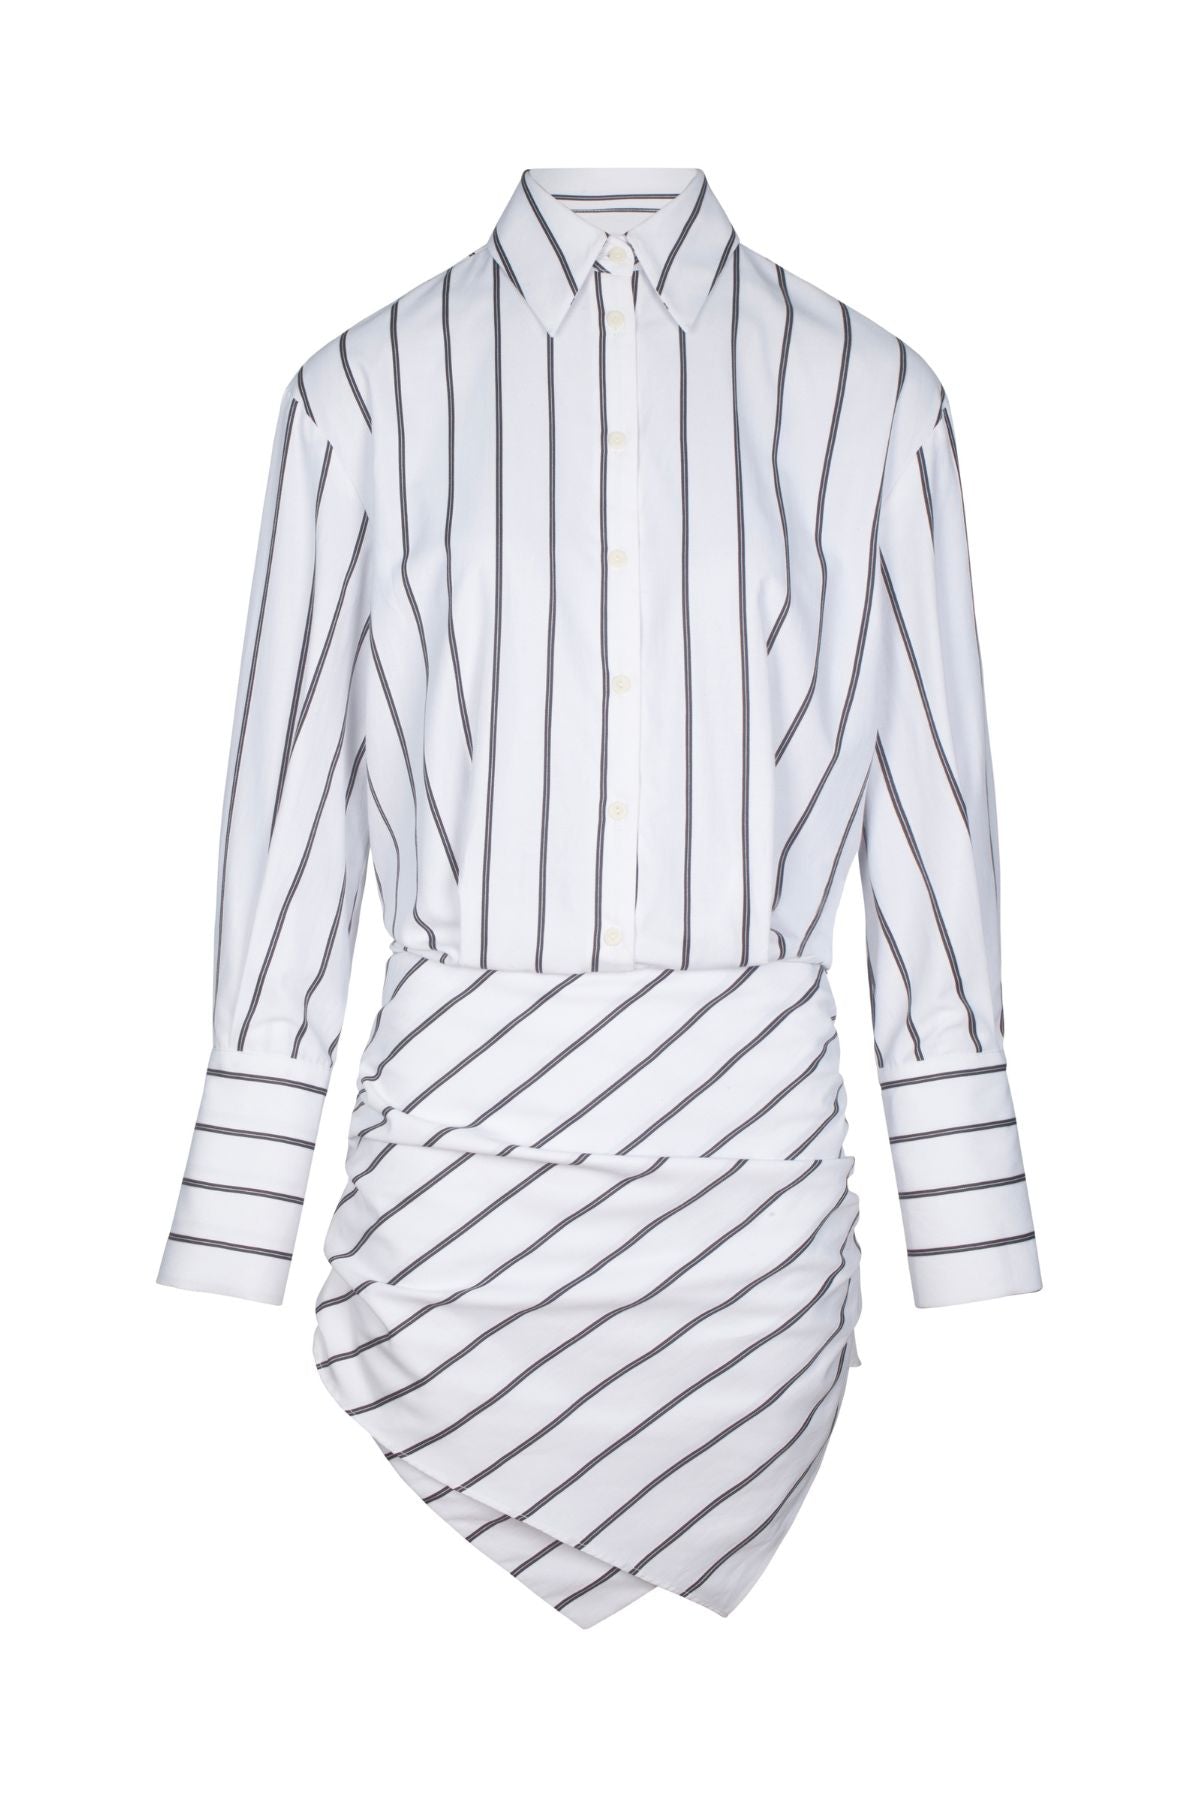 GAIA Black & White Stripe Shirt Dress